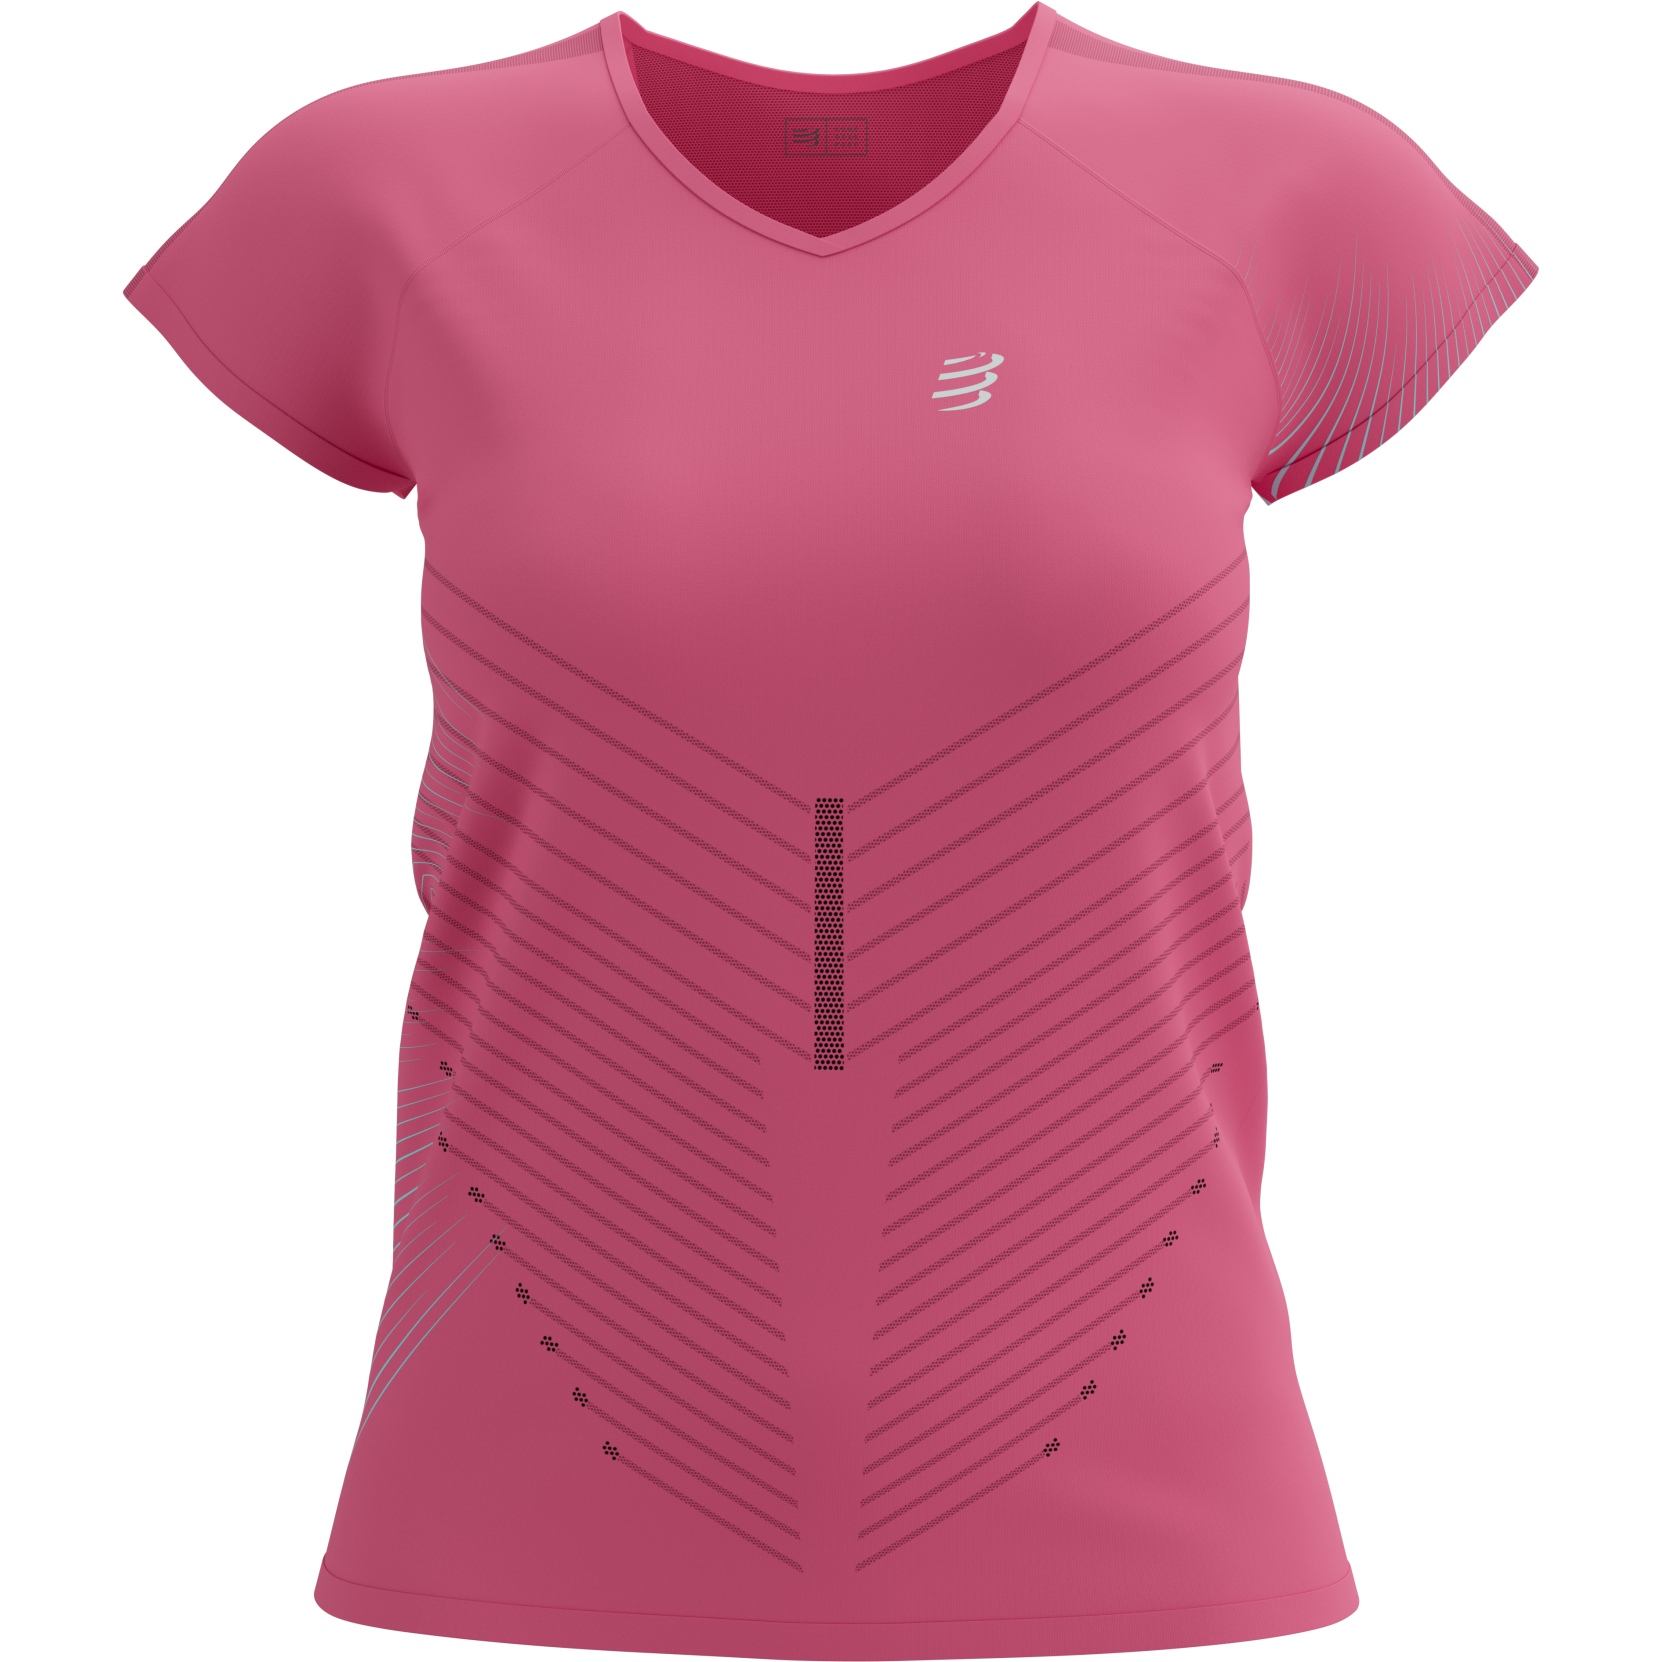 Picture of Compressport Performance T-Shirt Women - hot pink/aqua